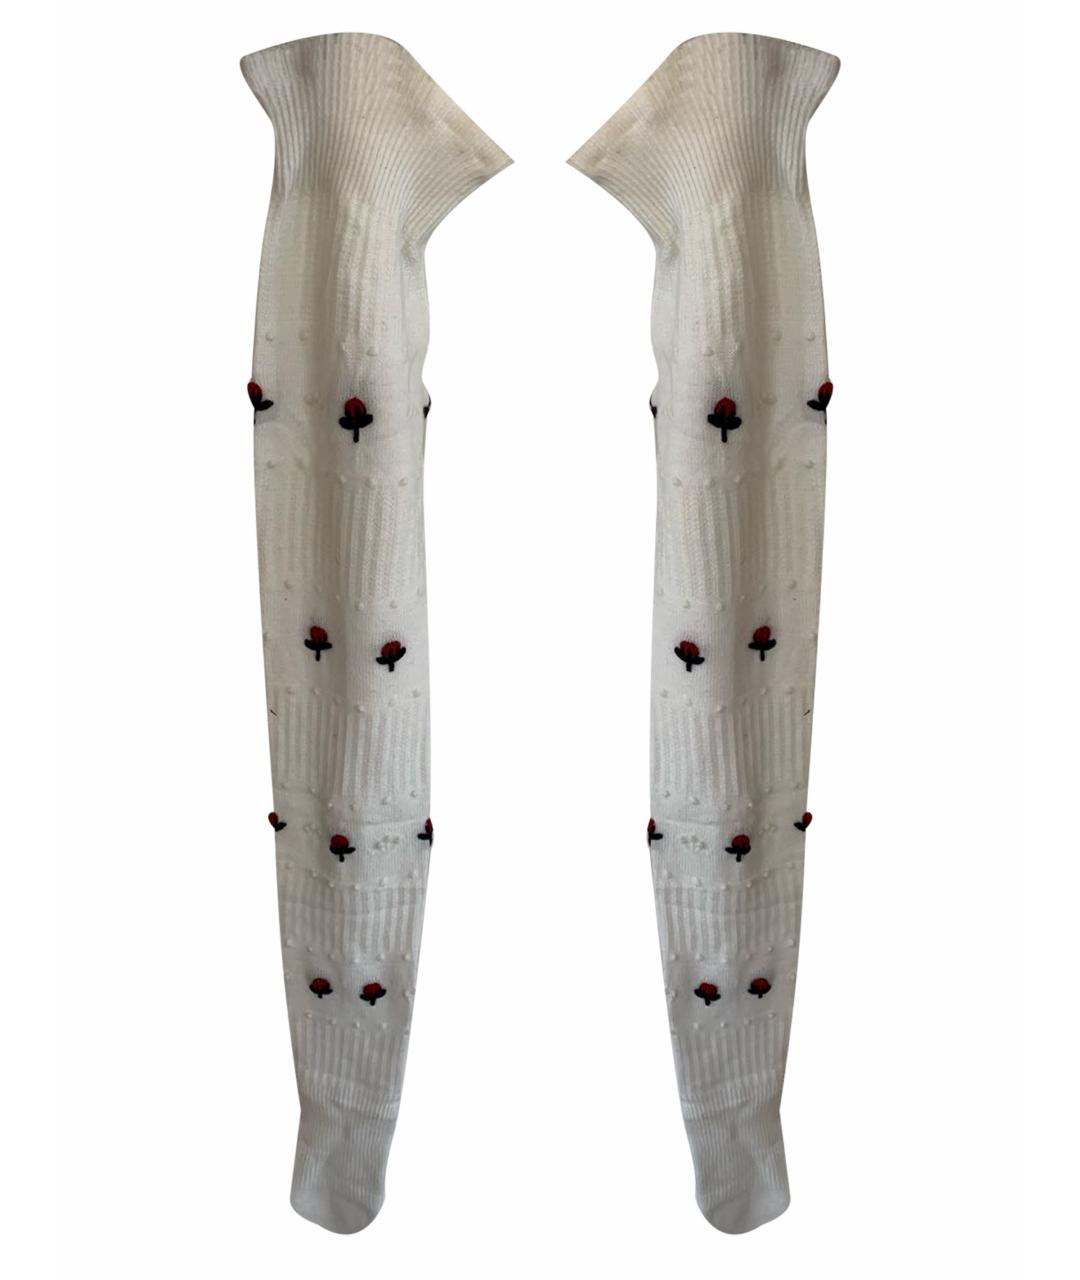 CHANEL PRE-OWNED Белые носки, чулки и колготы, фото 1